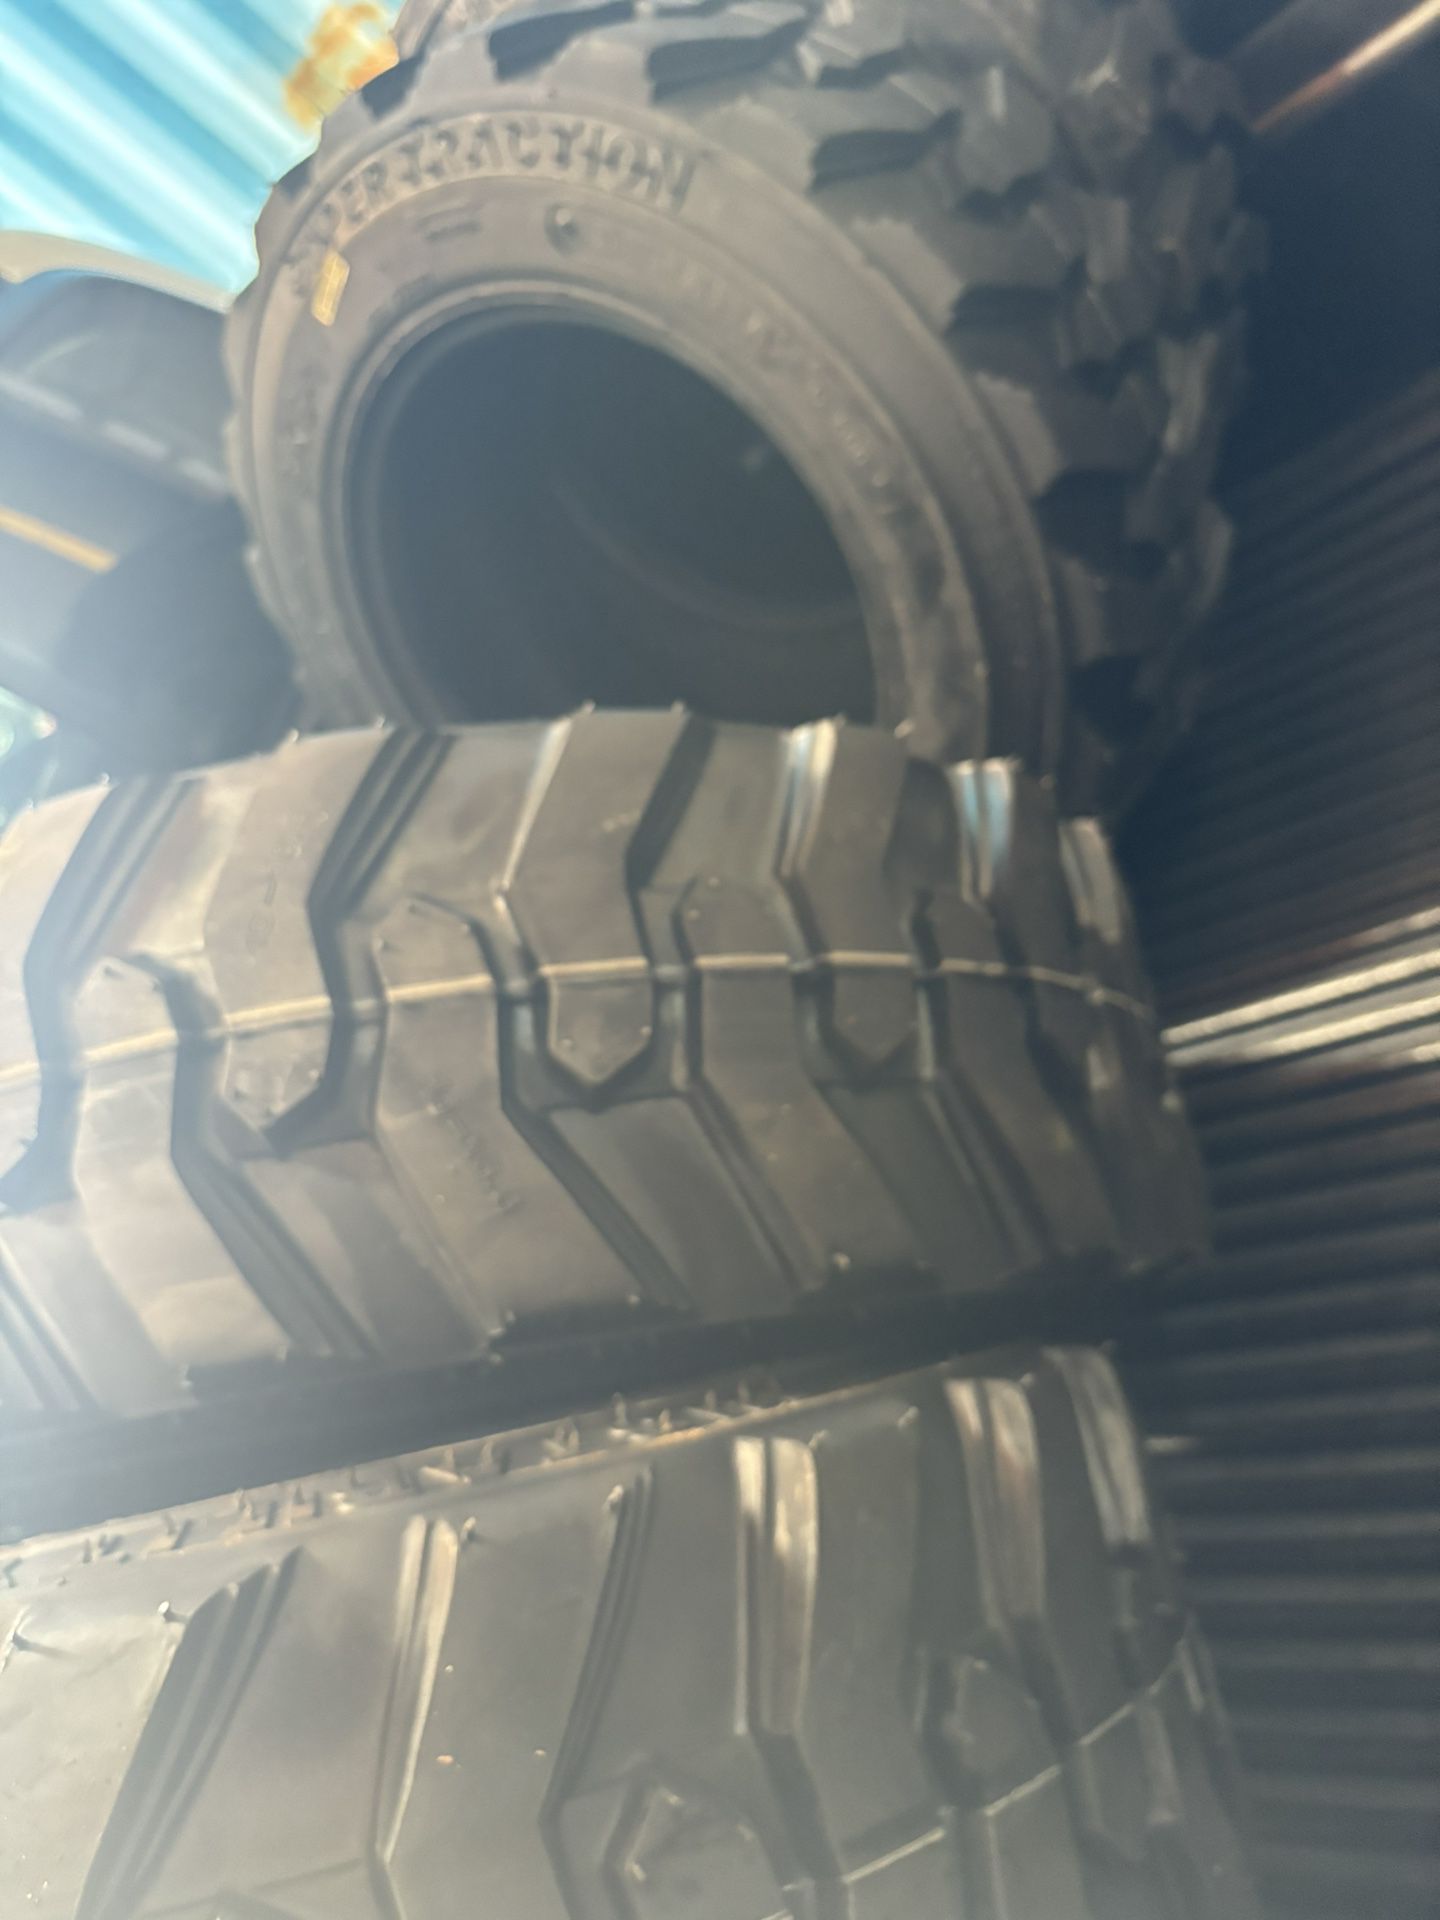 Set Of 4 Duromax Bobcat Tires 10x16.5 $500 